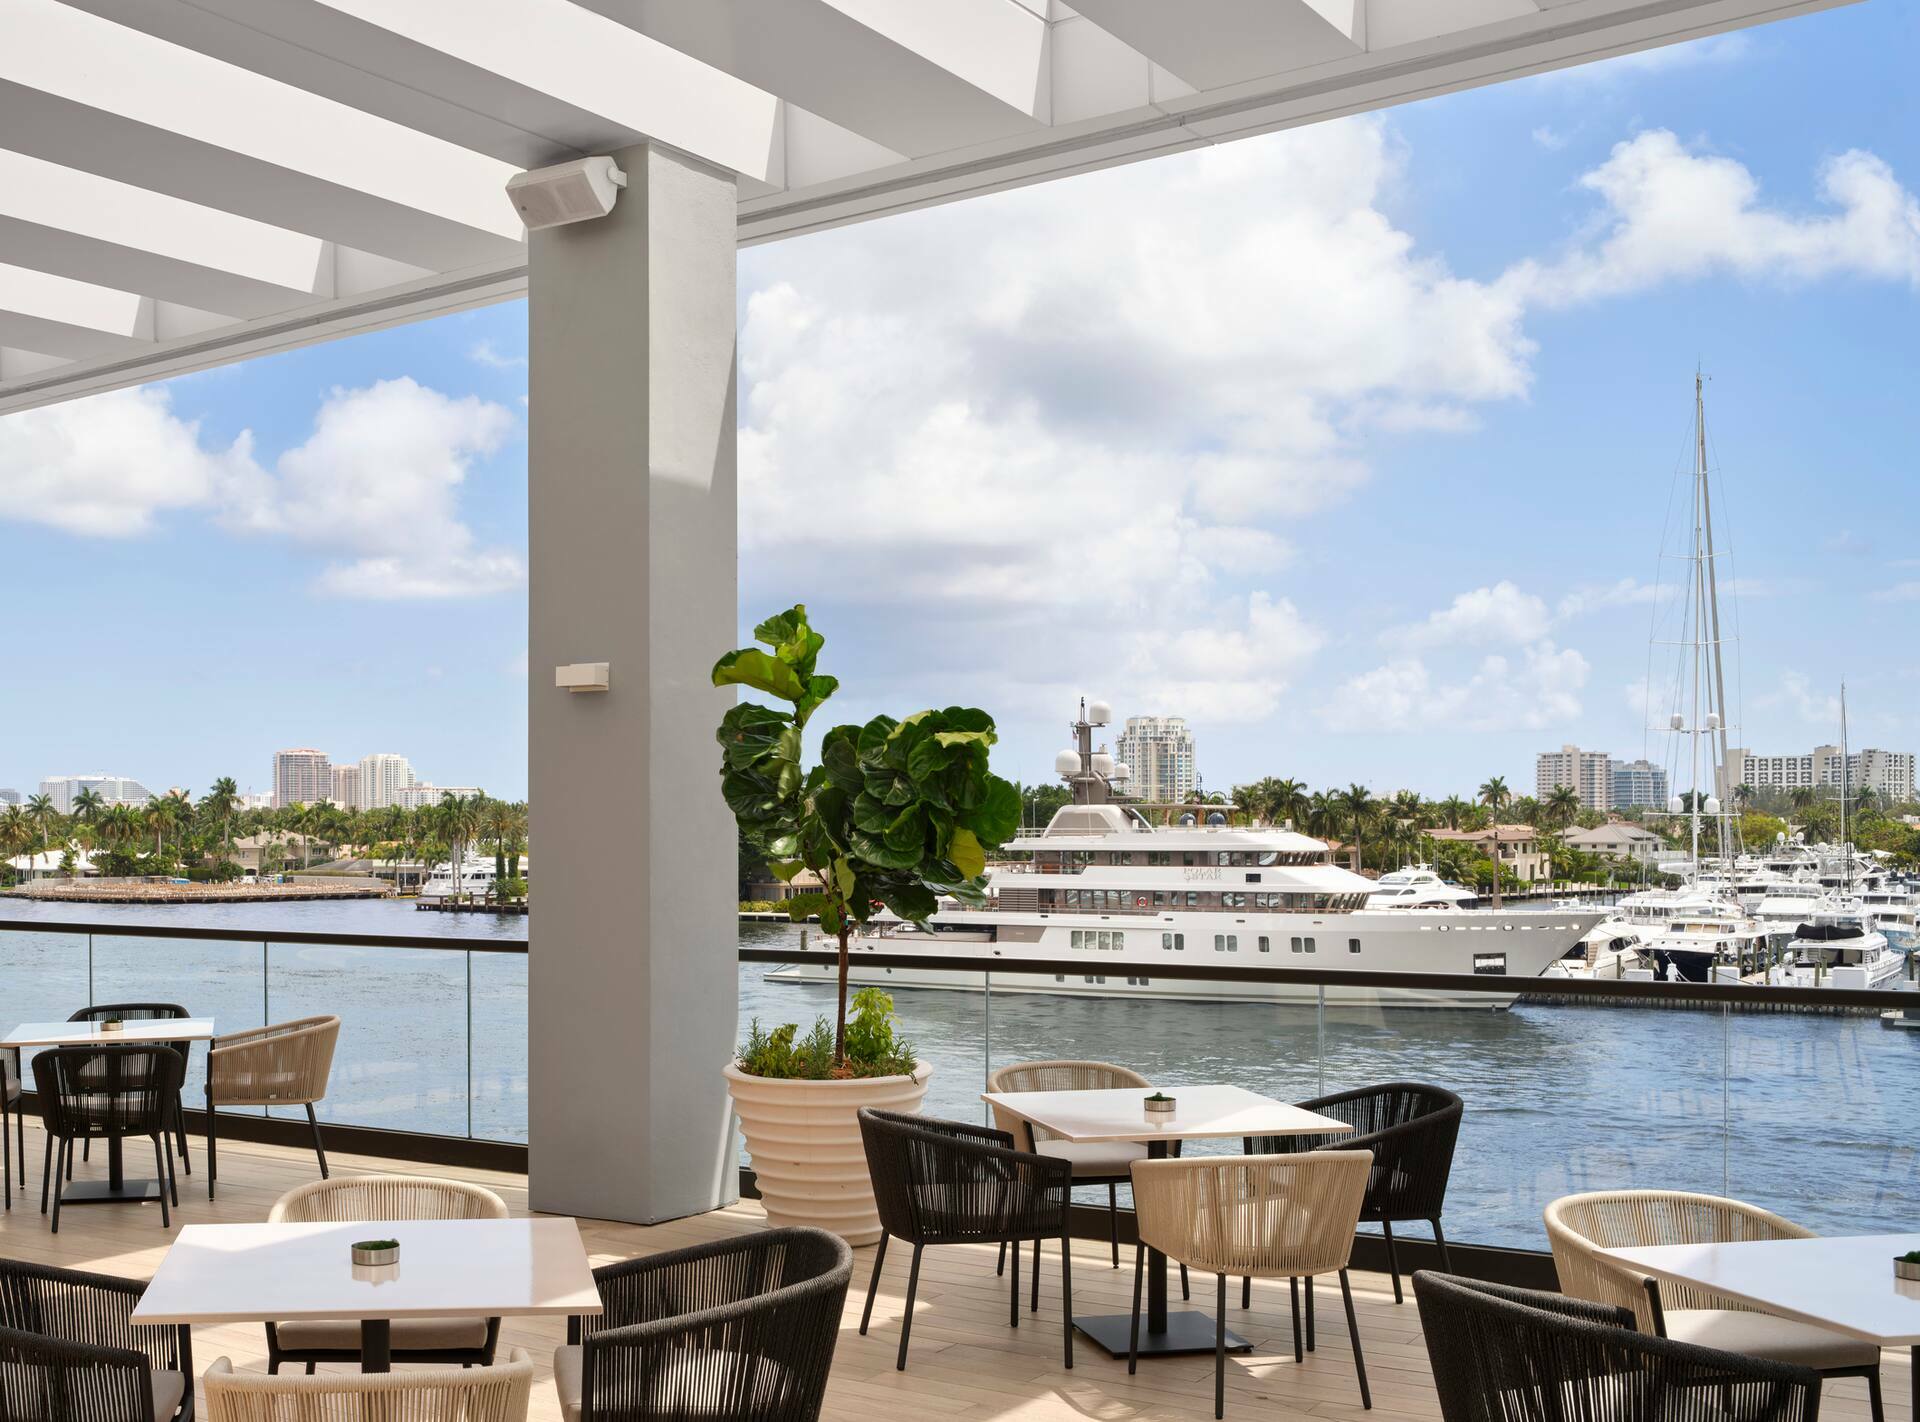 Photo of Hilton Fort Lauderdale Marina, Fort Lauderdale, FL